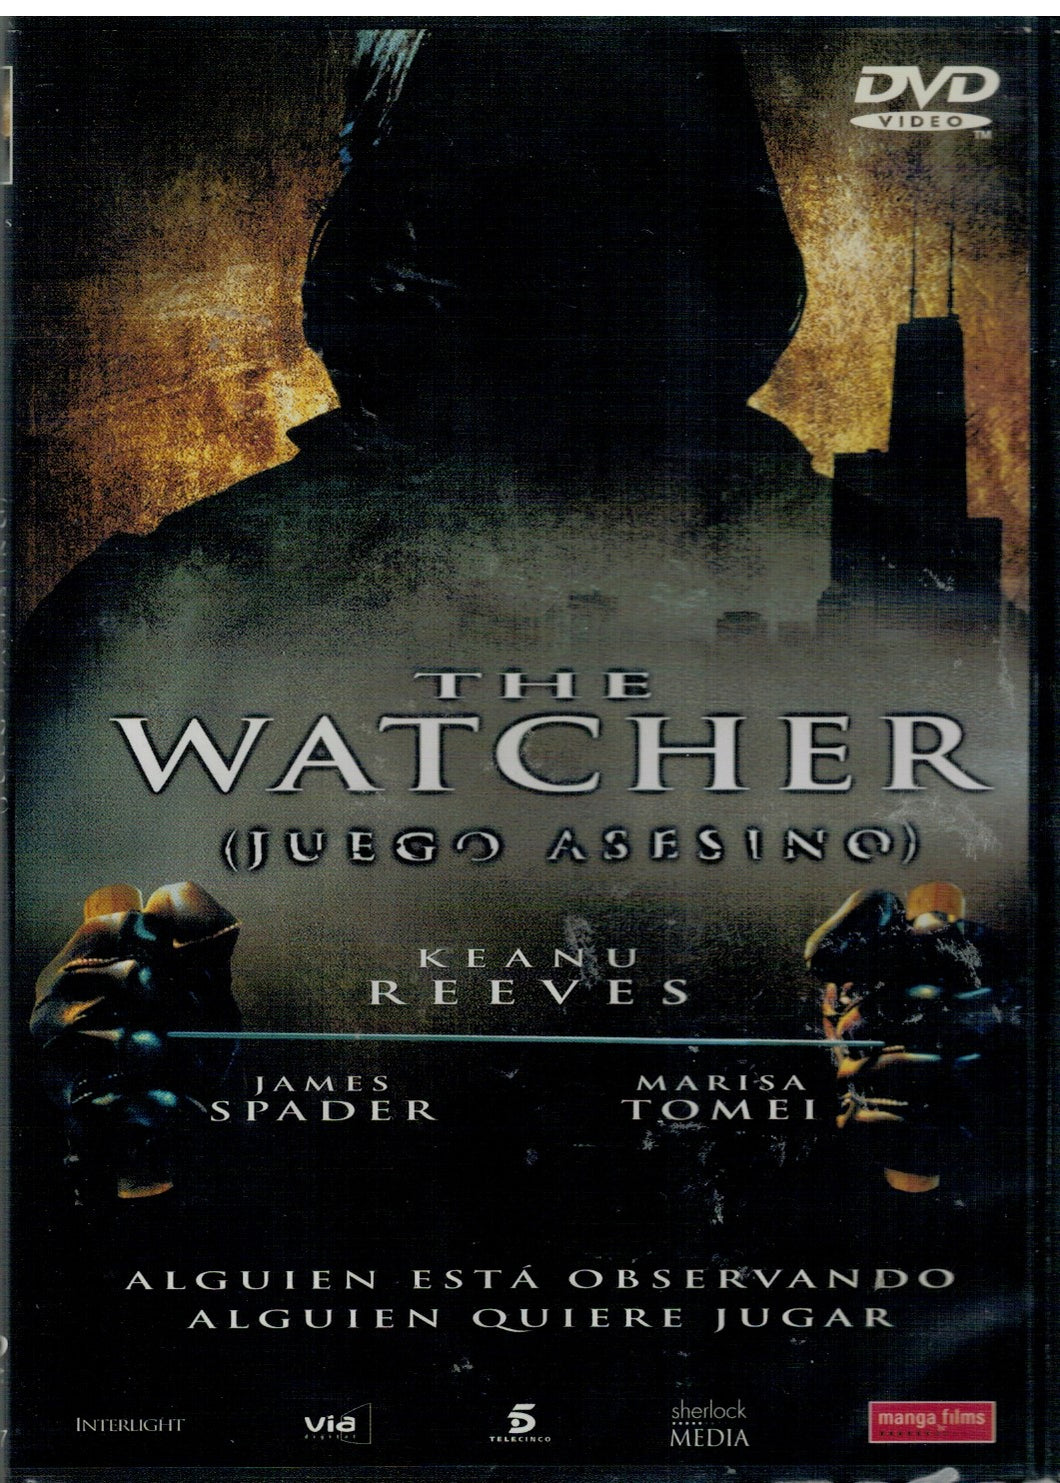 The Watcher (Juego asesino) (DVD Nuevo)